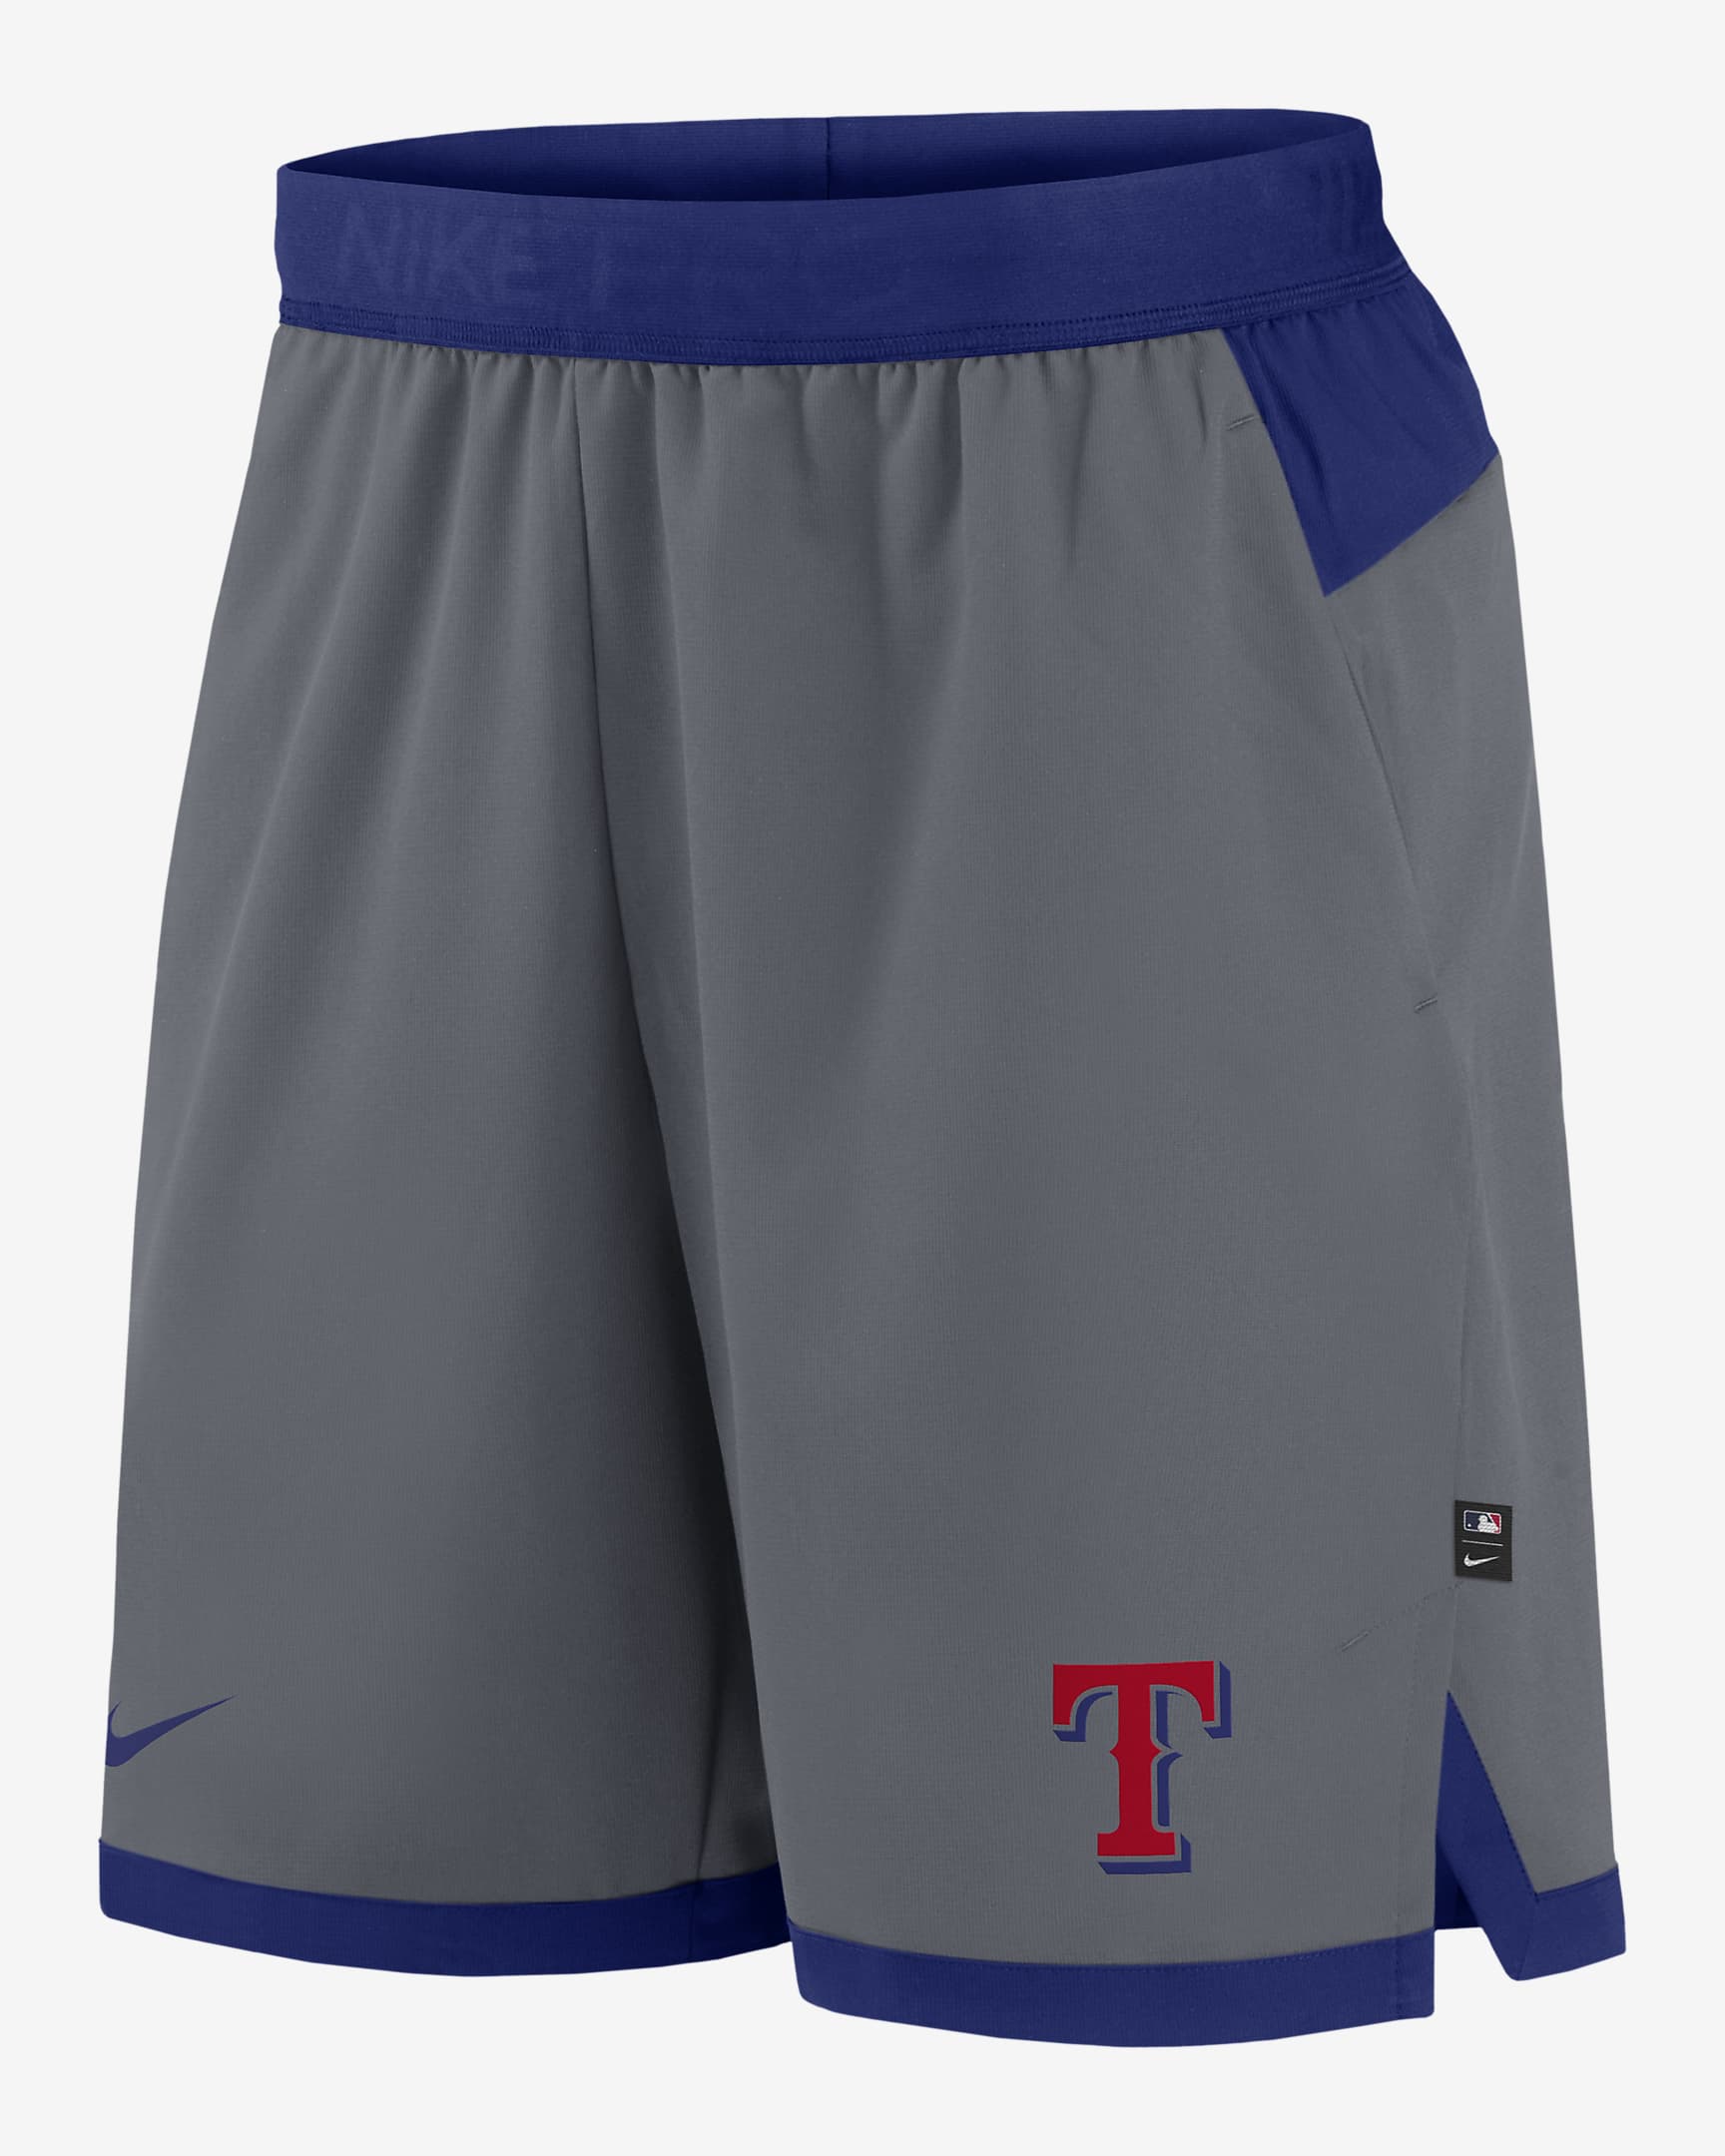 Nike Dri-FIT Flex (MLB Texas Rangers) Men's Shorts. Nike.com